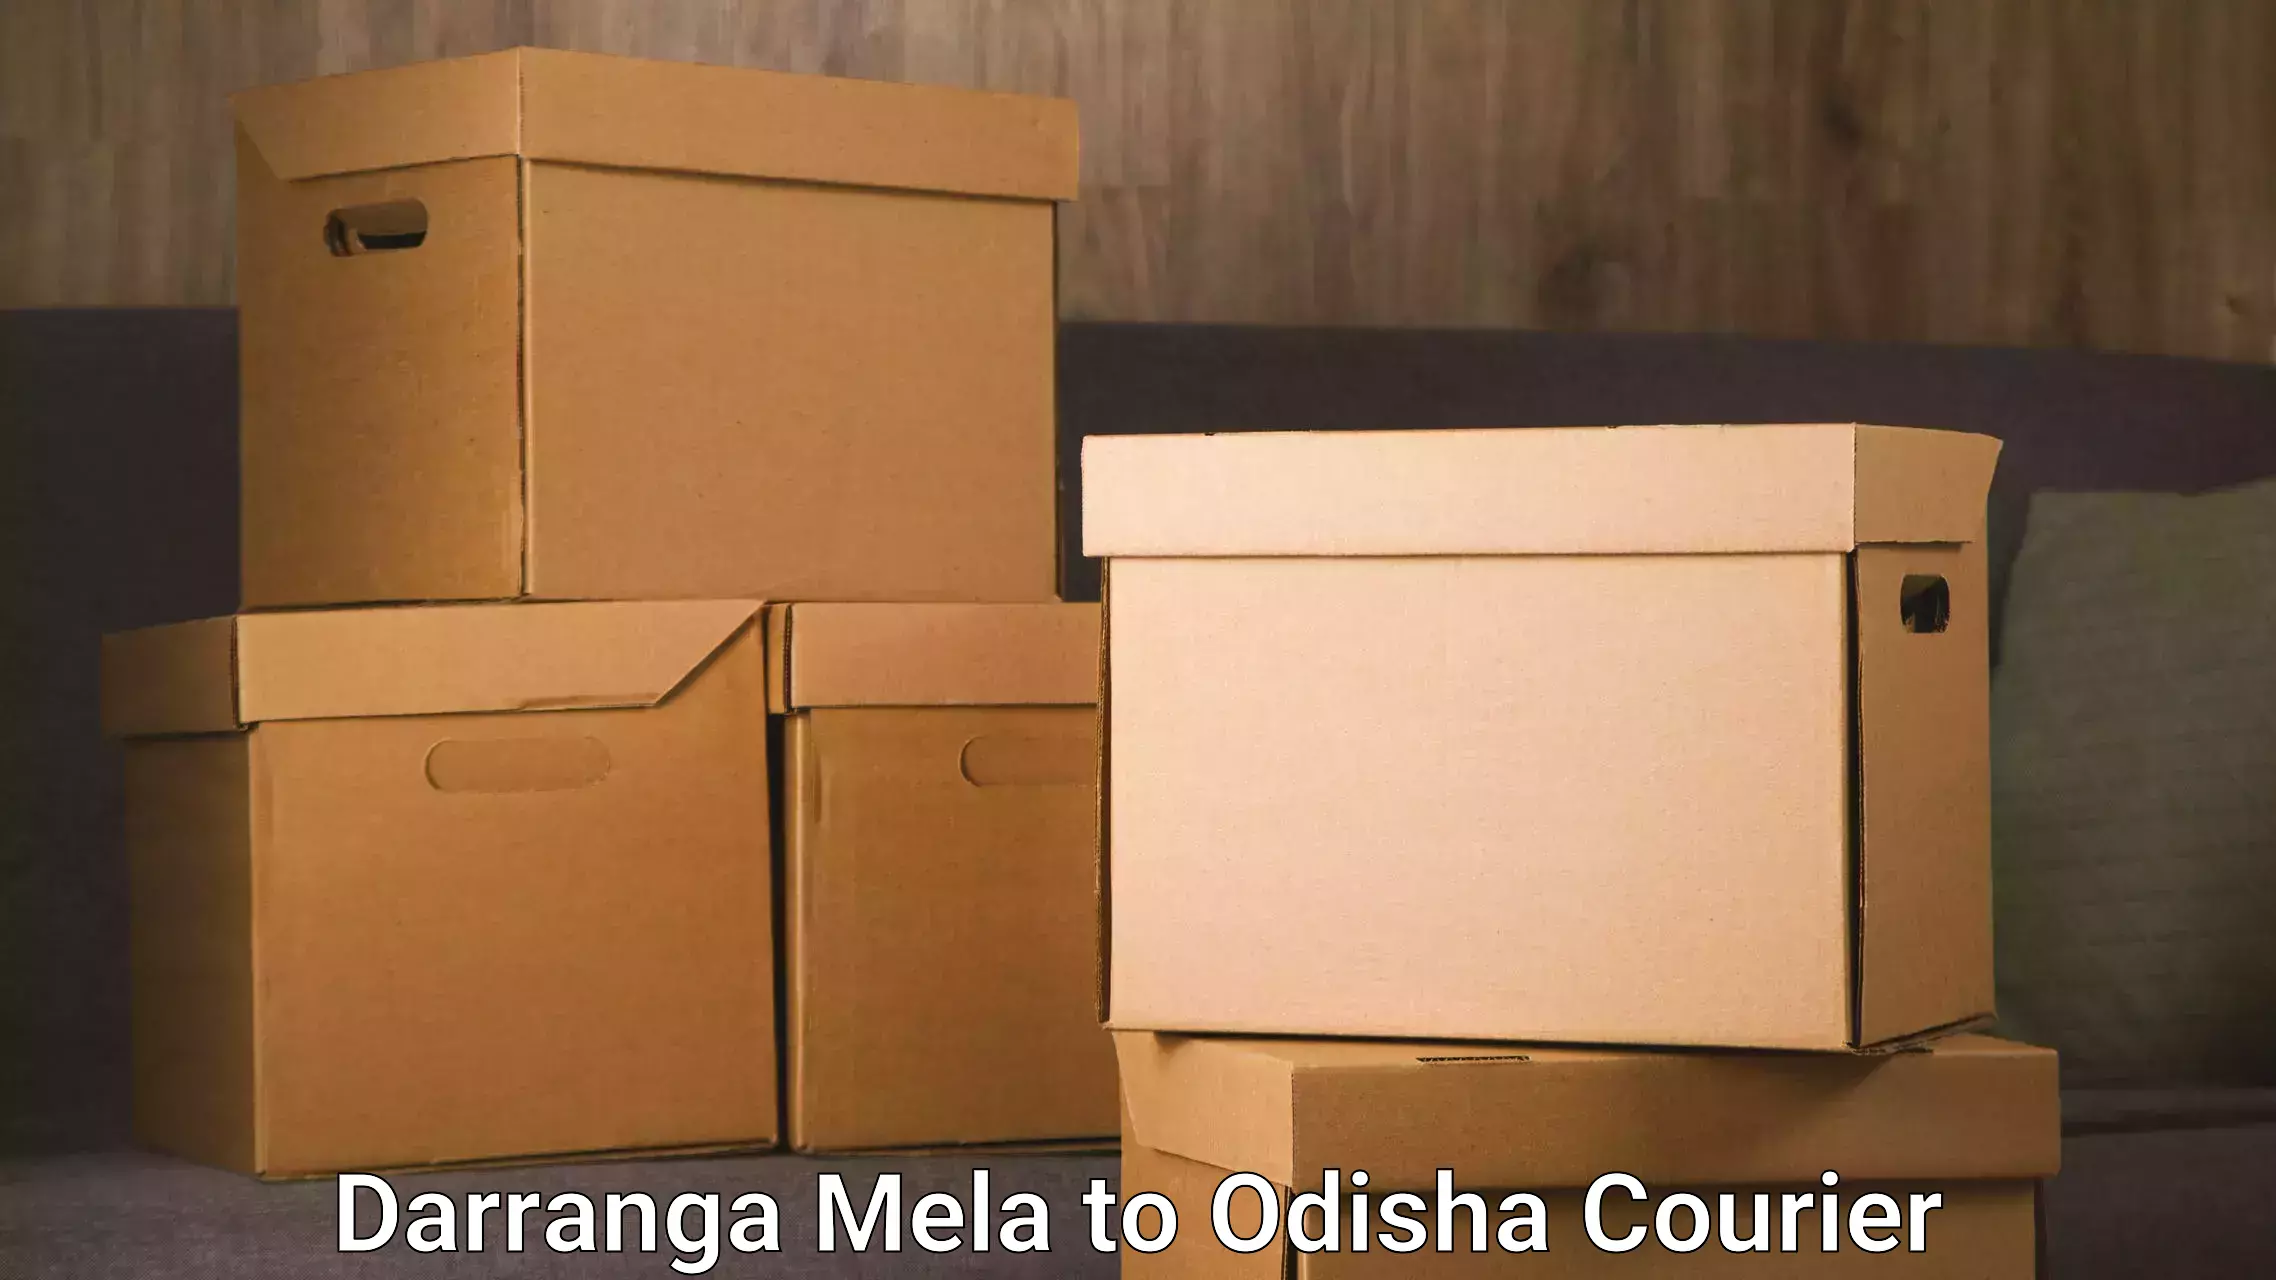 Enhanced delivery experience in Darranga Mela to Rairakhol